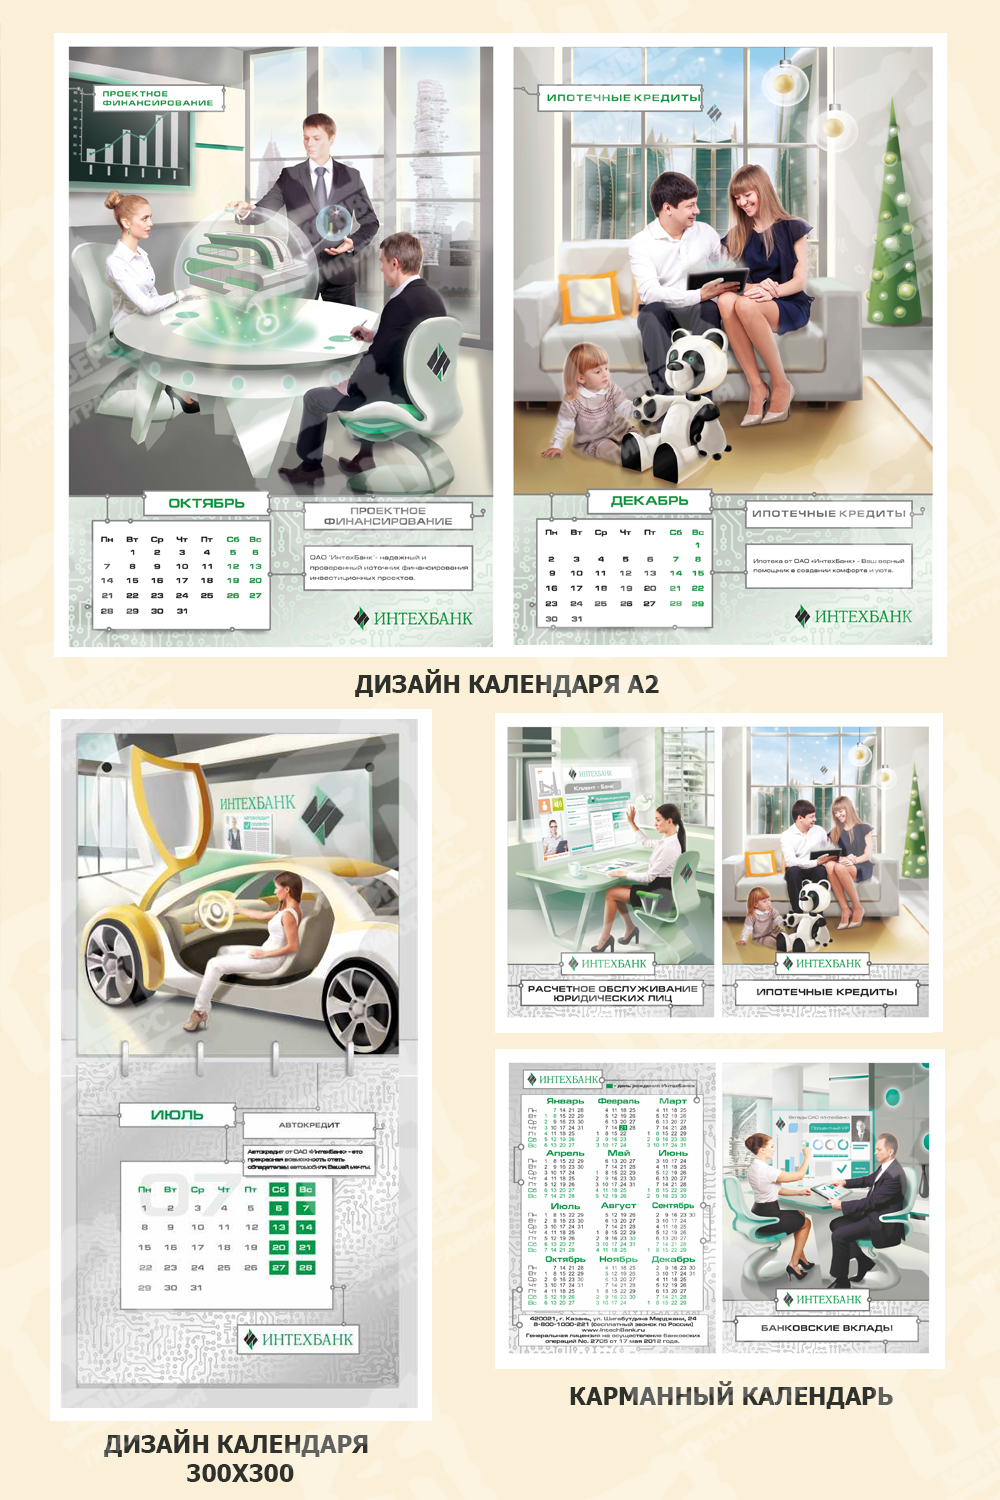 Дизайн календарей для «Интехбанка»